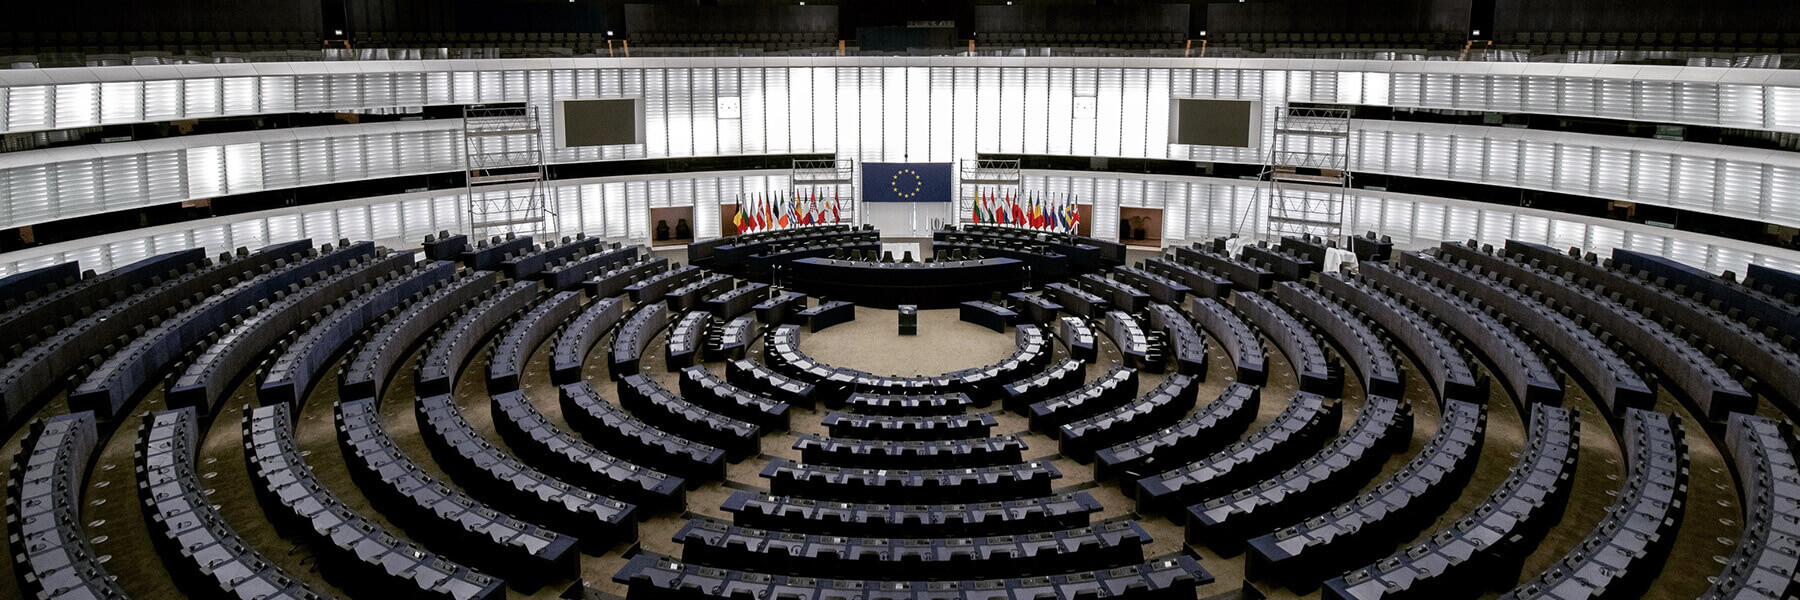 A room inside The European Parliament building